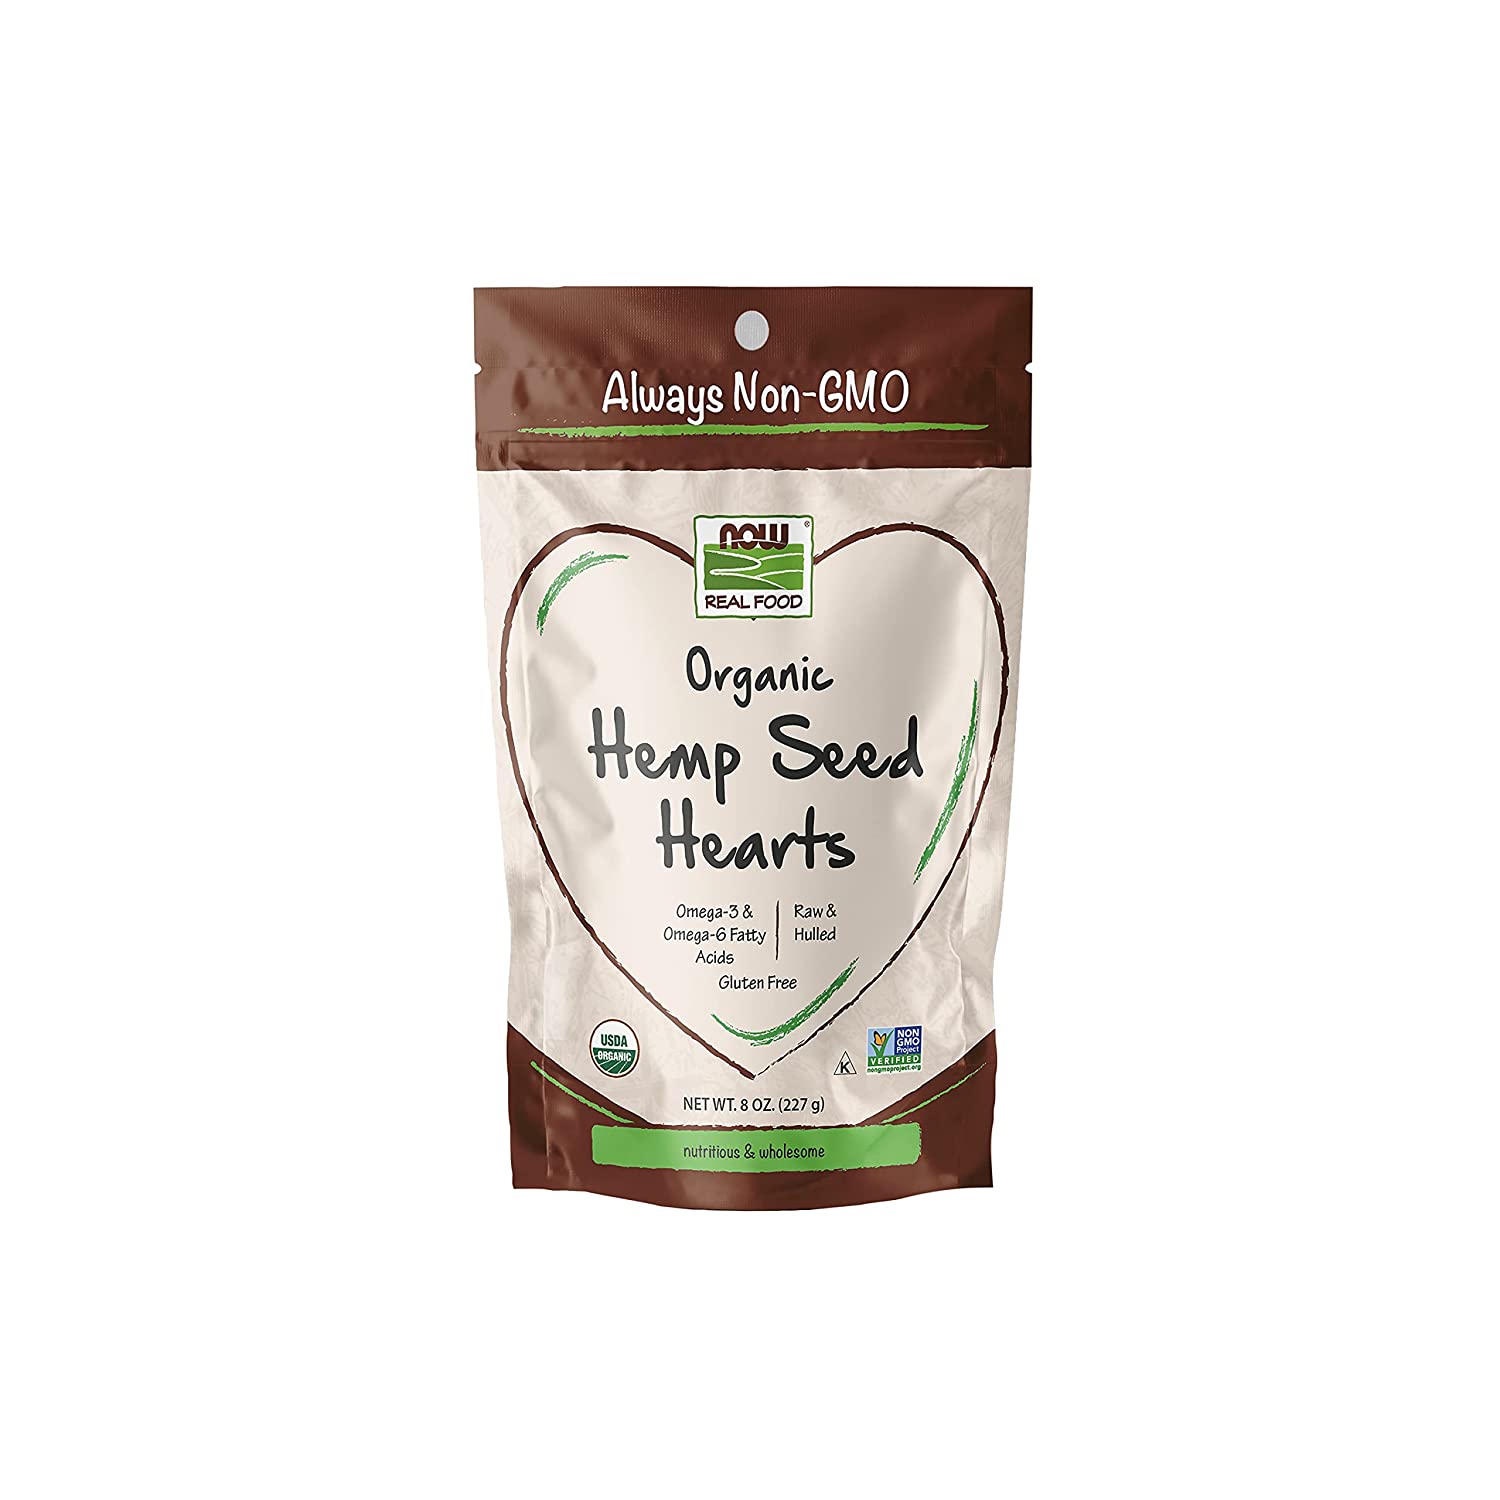 Organic Hemp Seed Hearts, High Protein & Iron, with Omega-3 and Omega-6 Fatty Acids, Raw and Hul